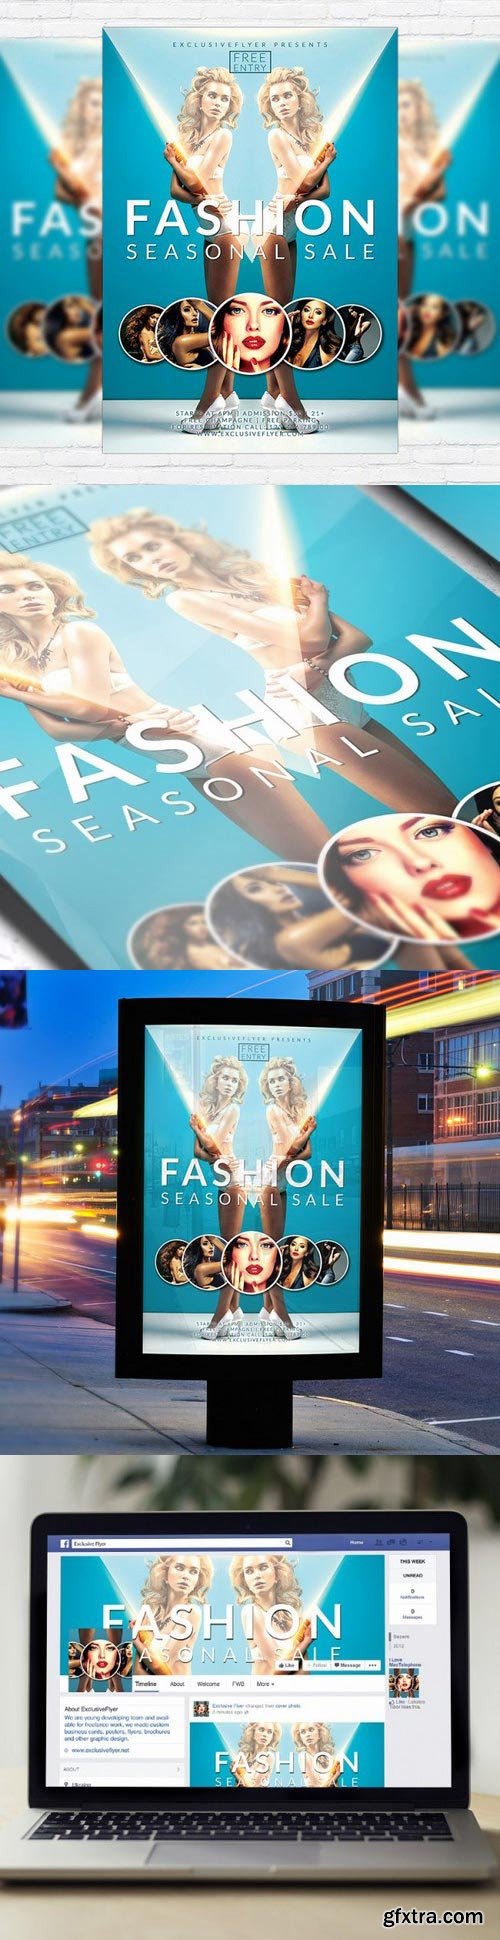 Fashion Seasonal Sale PSD Template + Facebook Cover